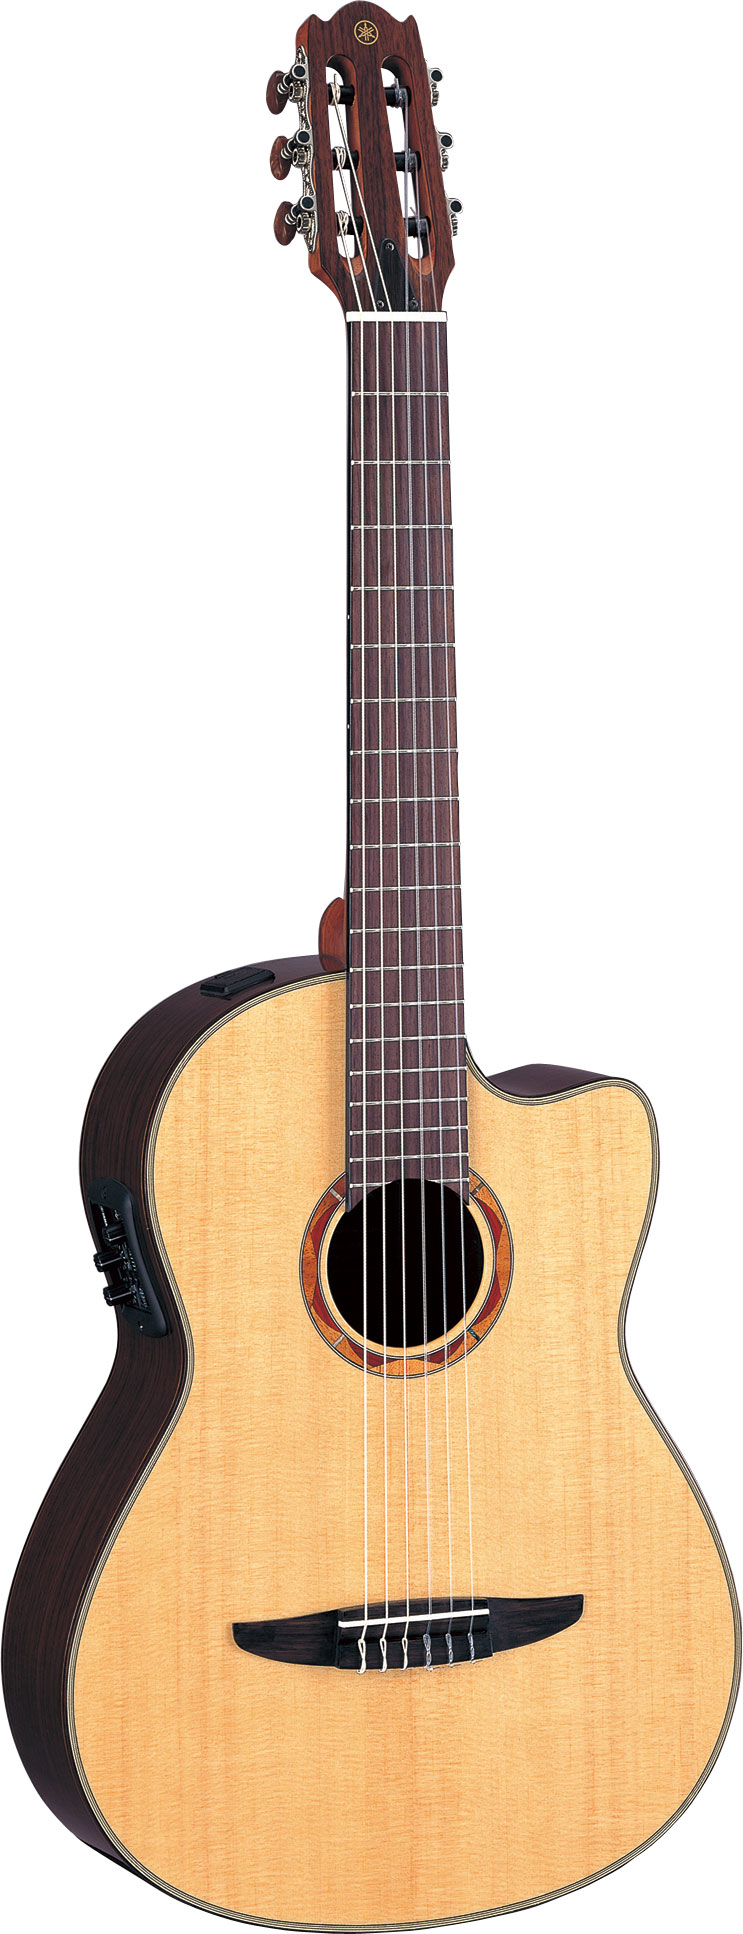 Электроклассическая гитара Yamaha NCX900R 